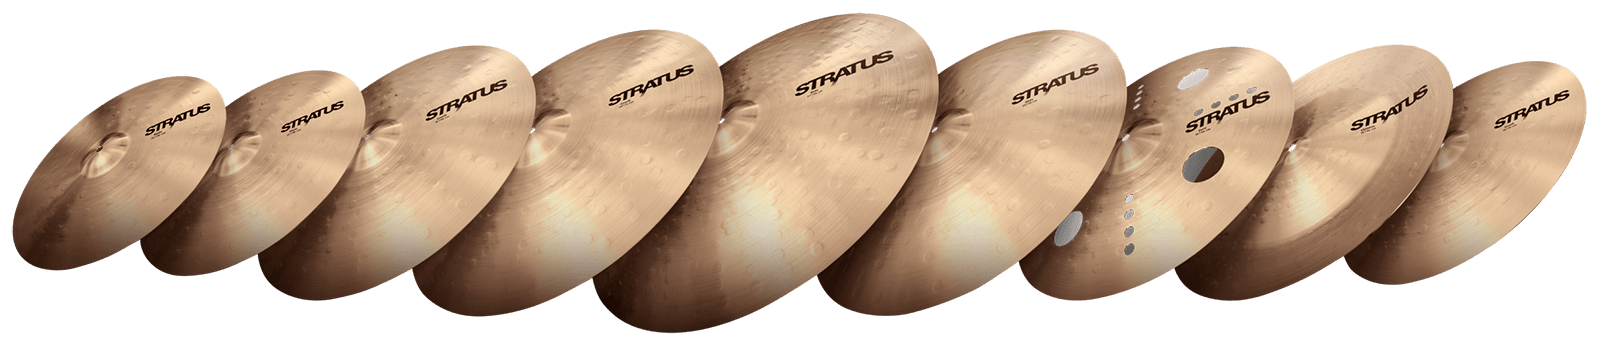 row of stratus cymbals